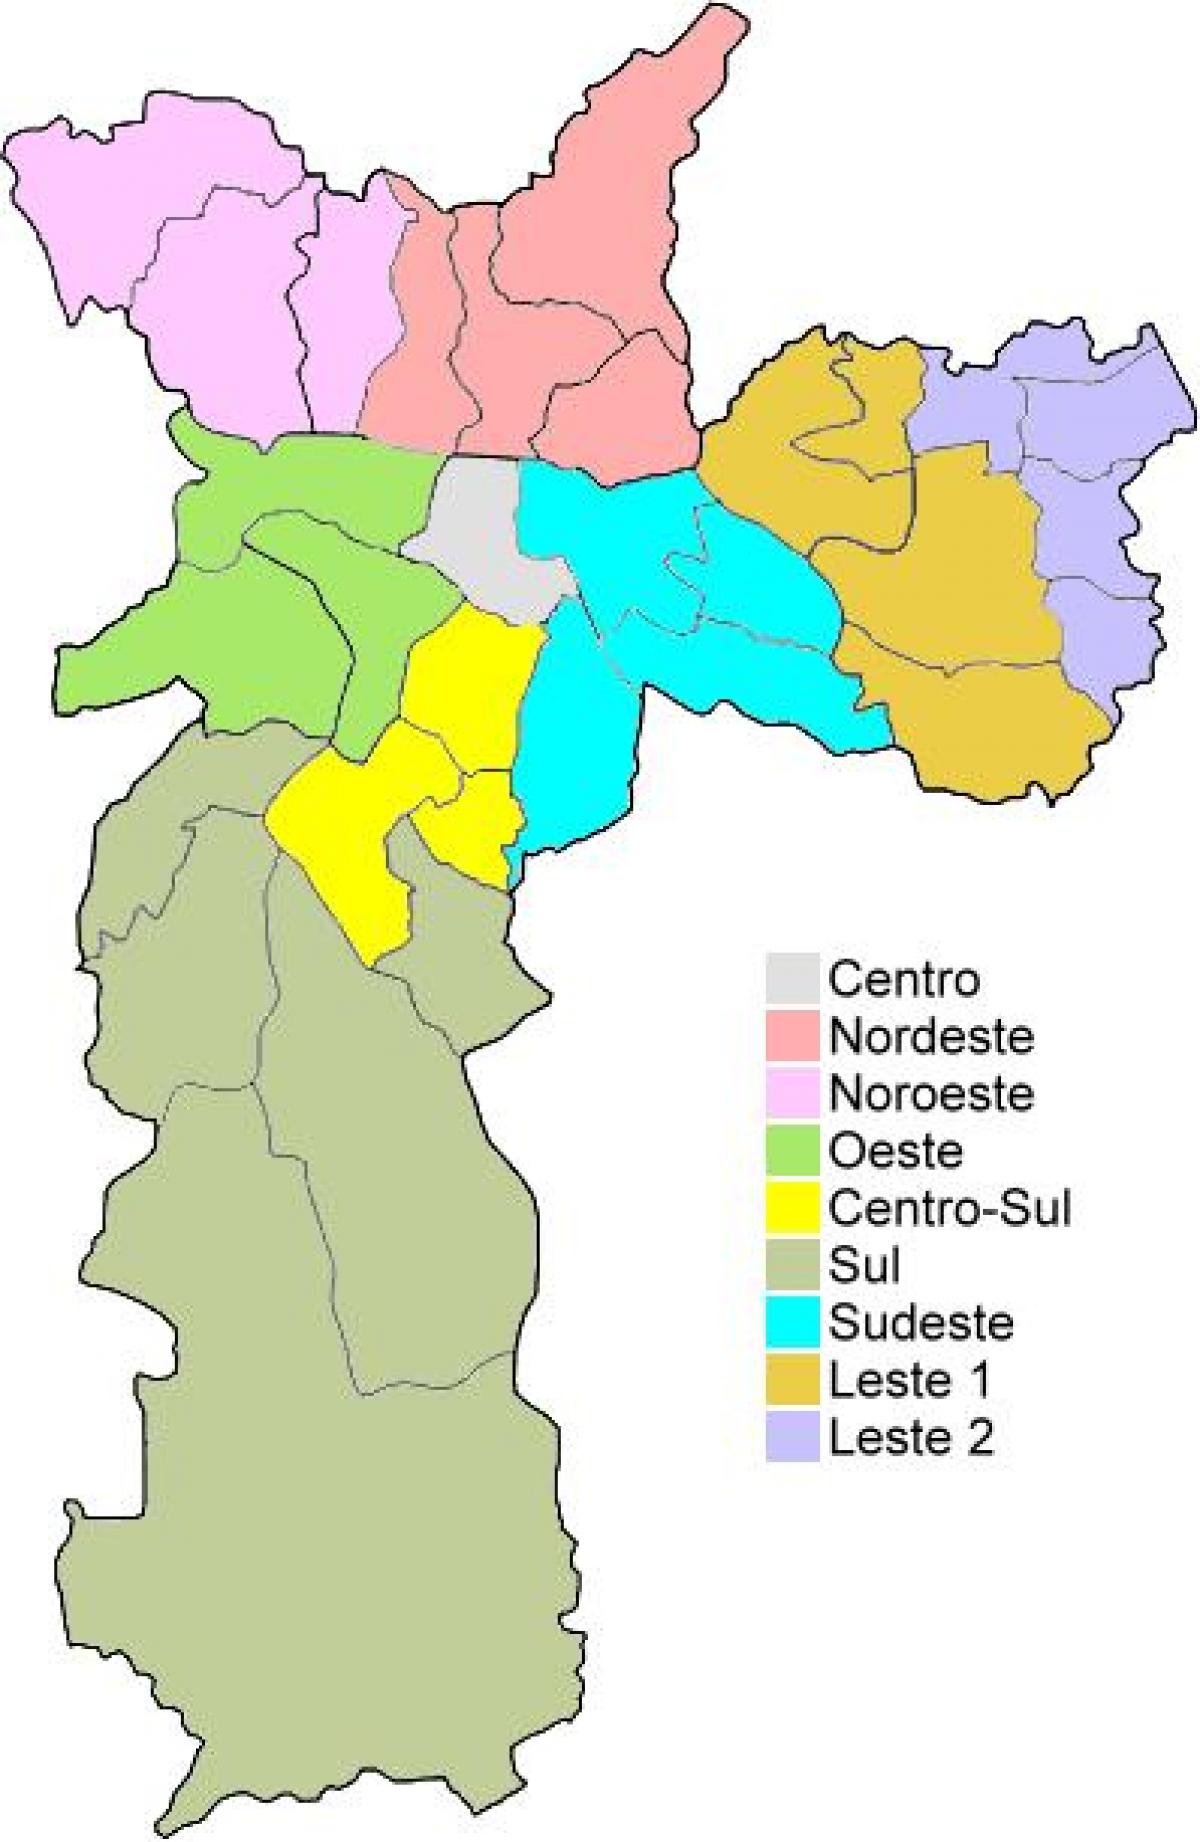 Mappa di regioni amministrative in São Paulo